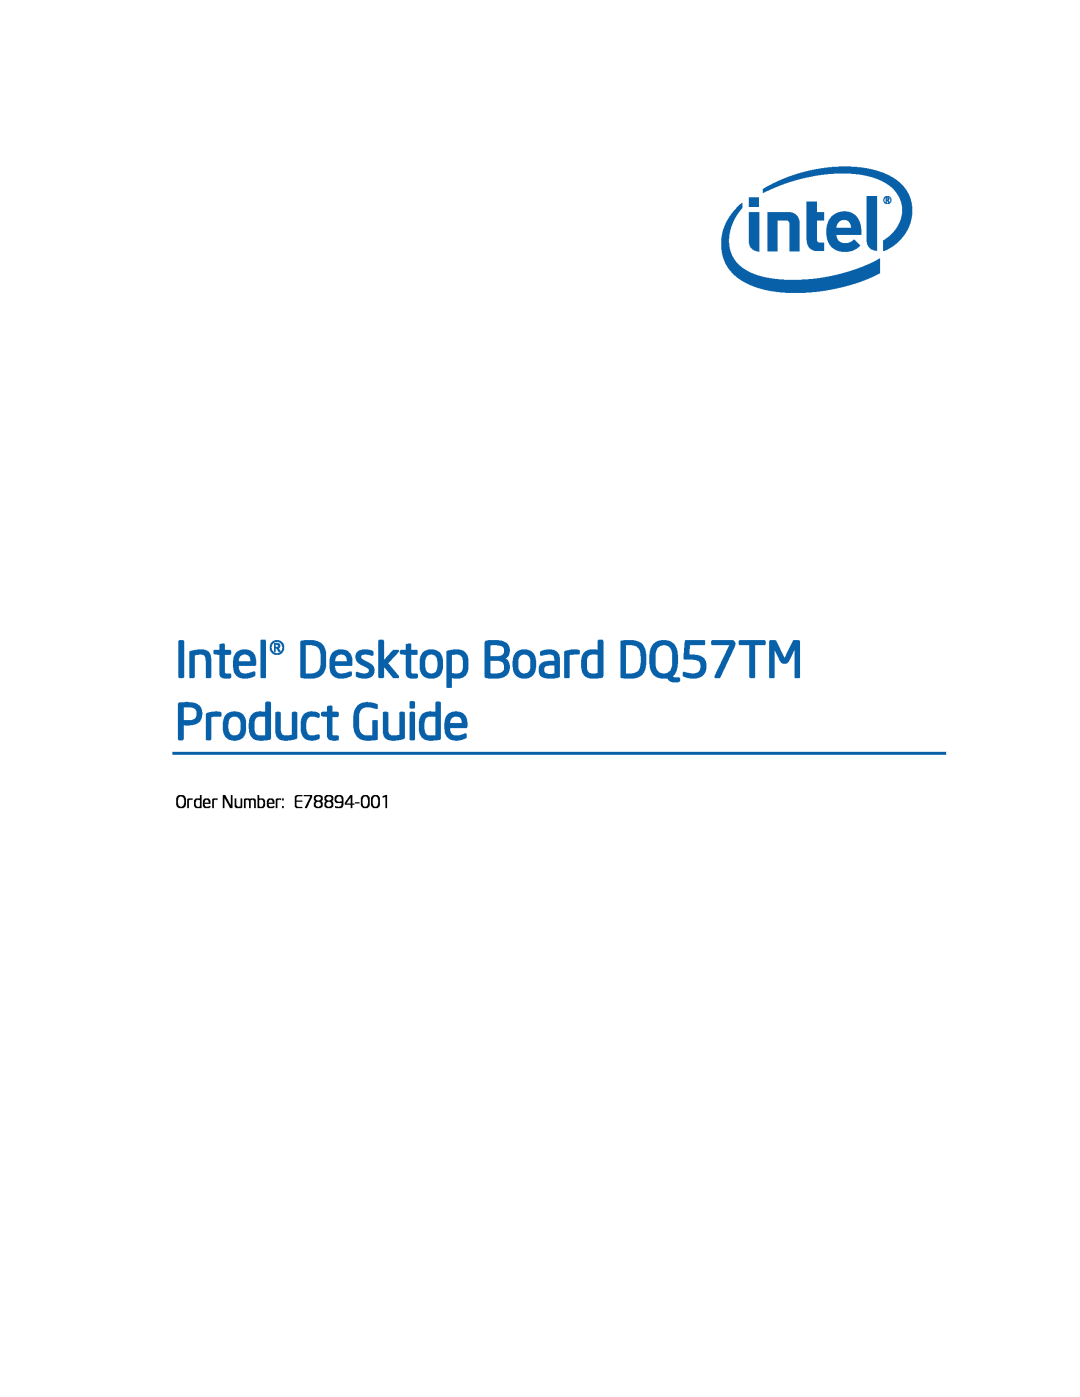 Intel manual Intel Desktop Board DQ57TM Product Guide, Order Number E78894-001 